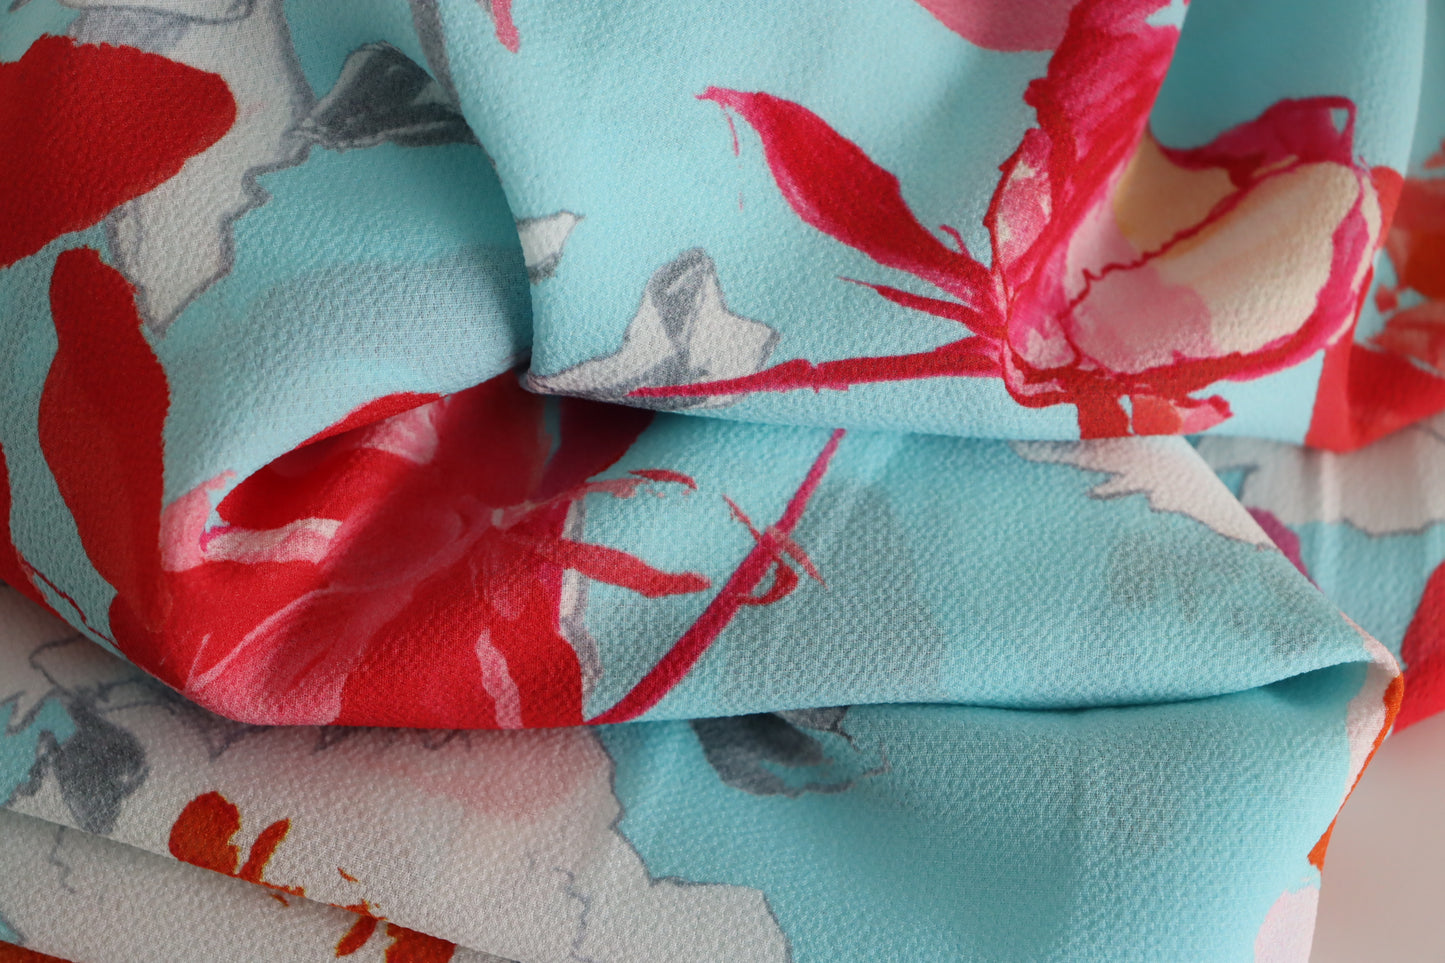 Tissu Polyester imprimé floral | Julia